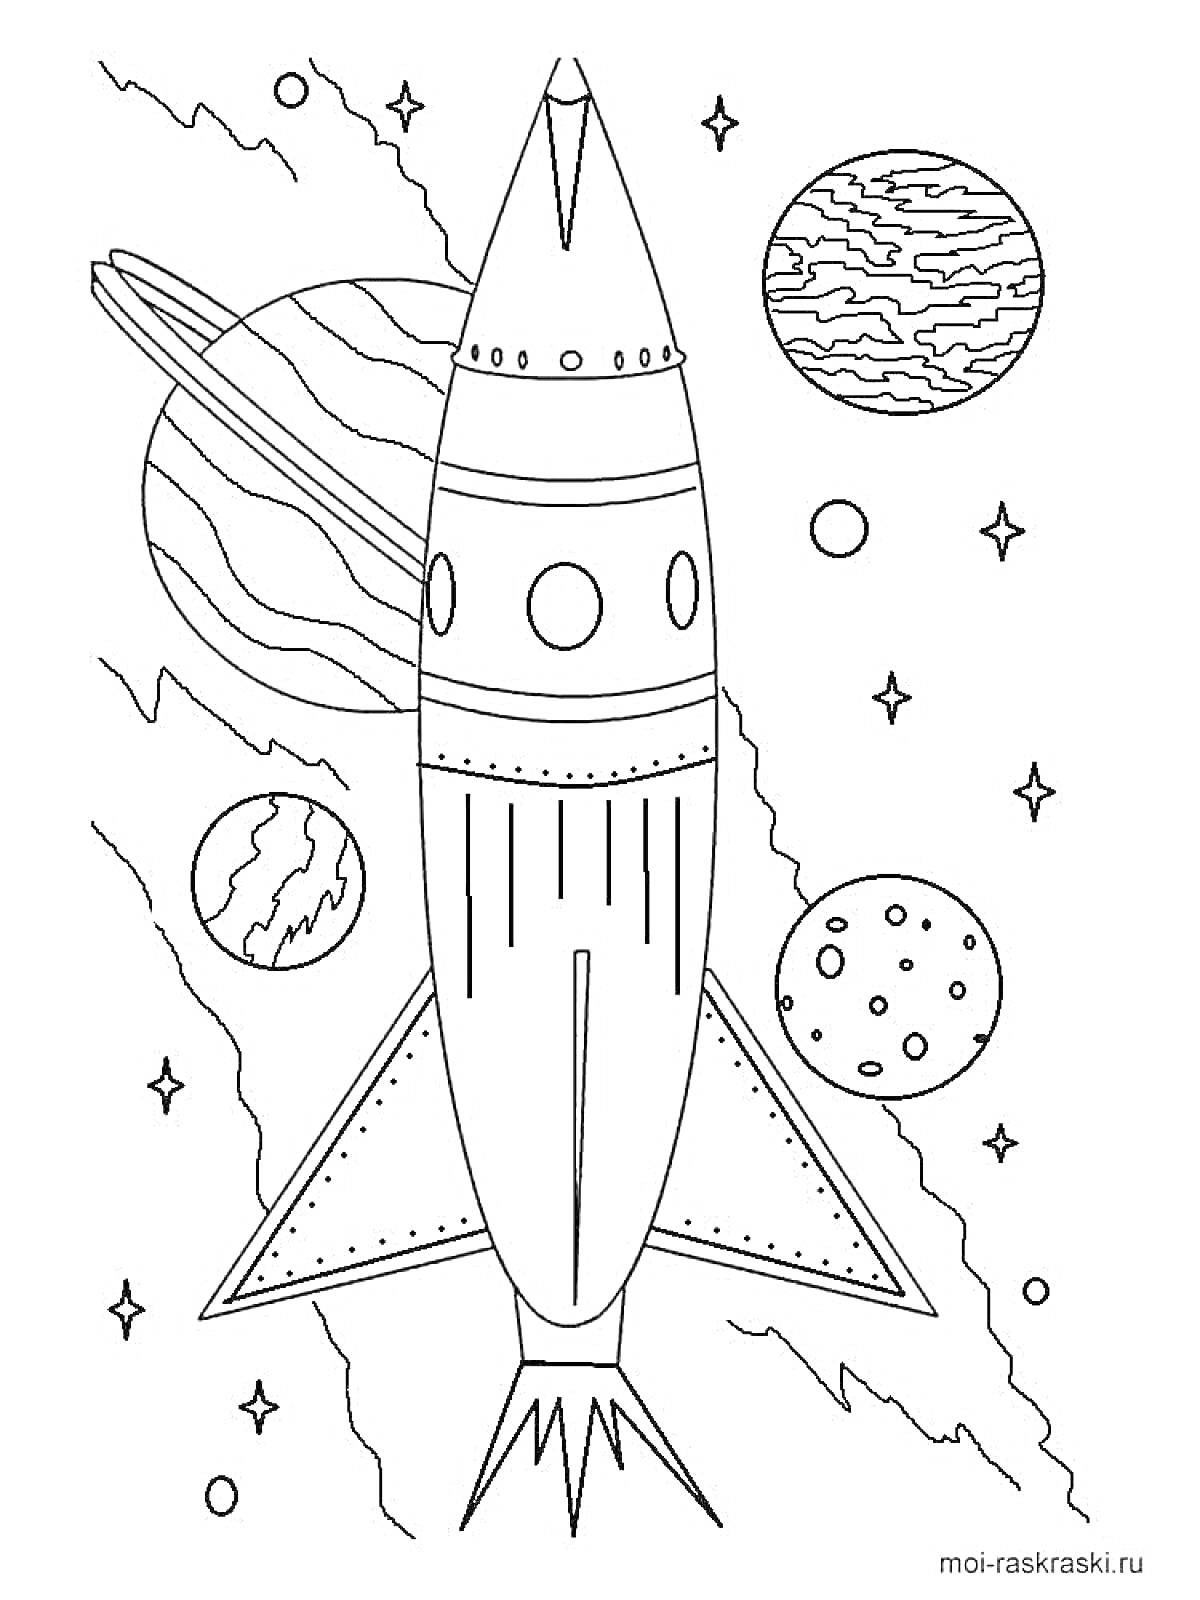 На раскраске изображено: Космос, Ракета, Планеты, Звезды, Небо, Галактика, Астронавтика, Для детей, Исследования